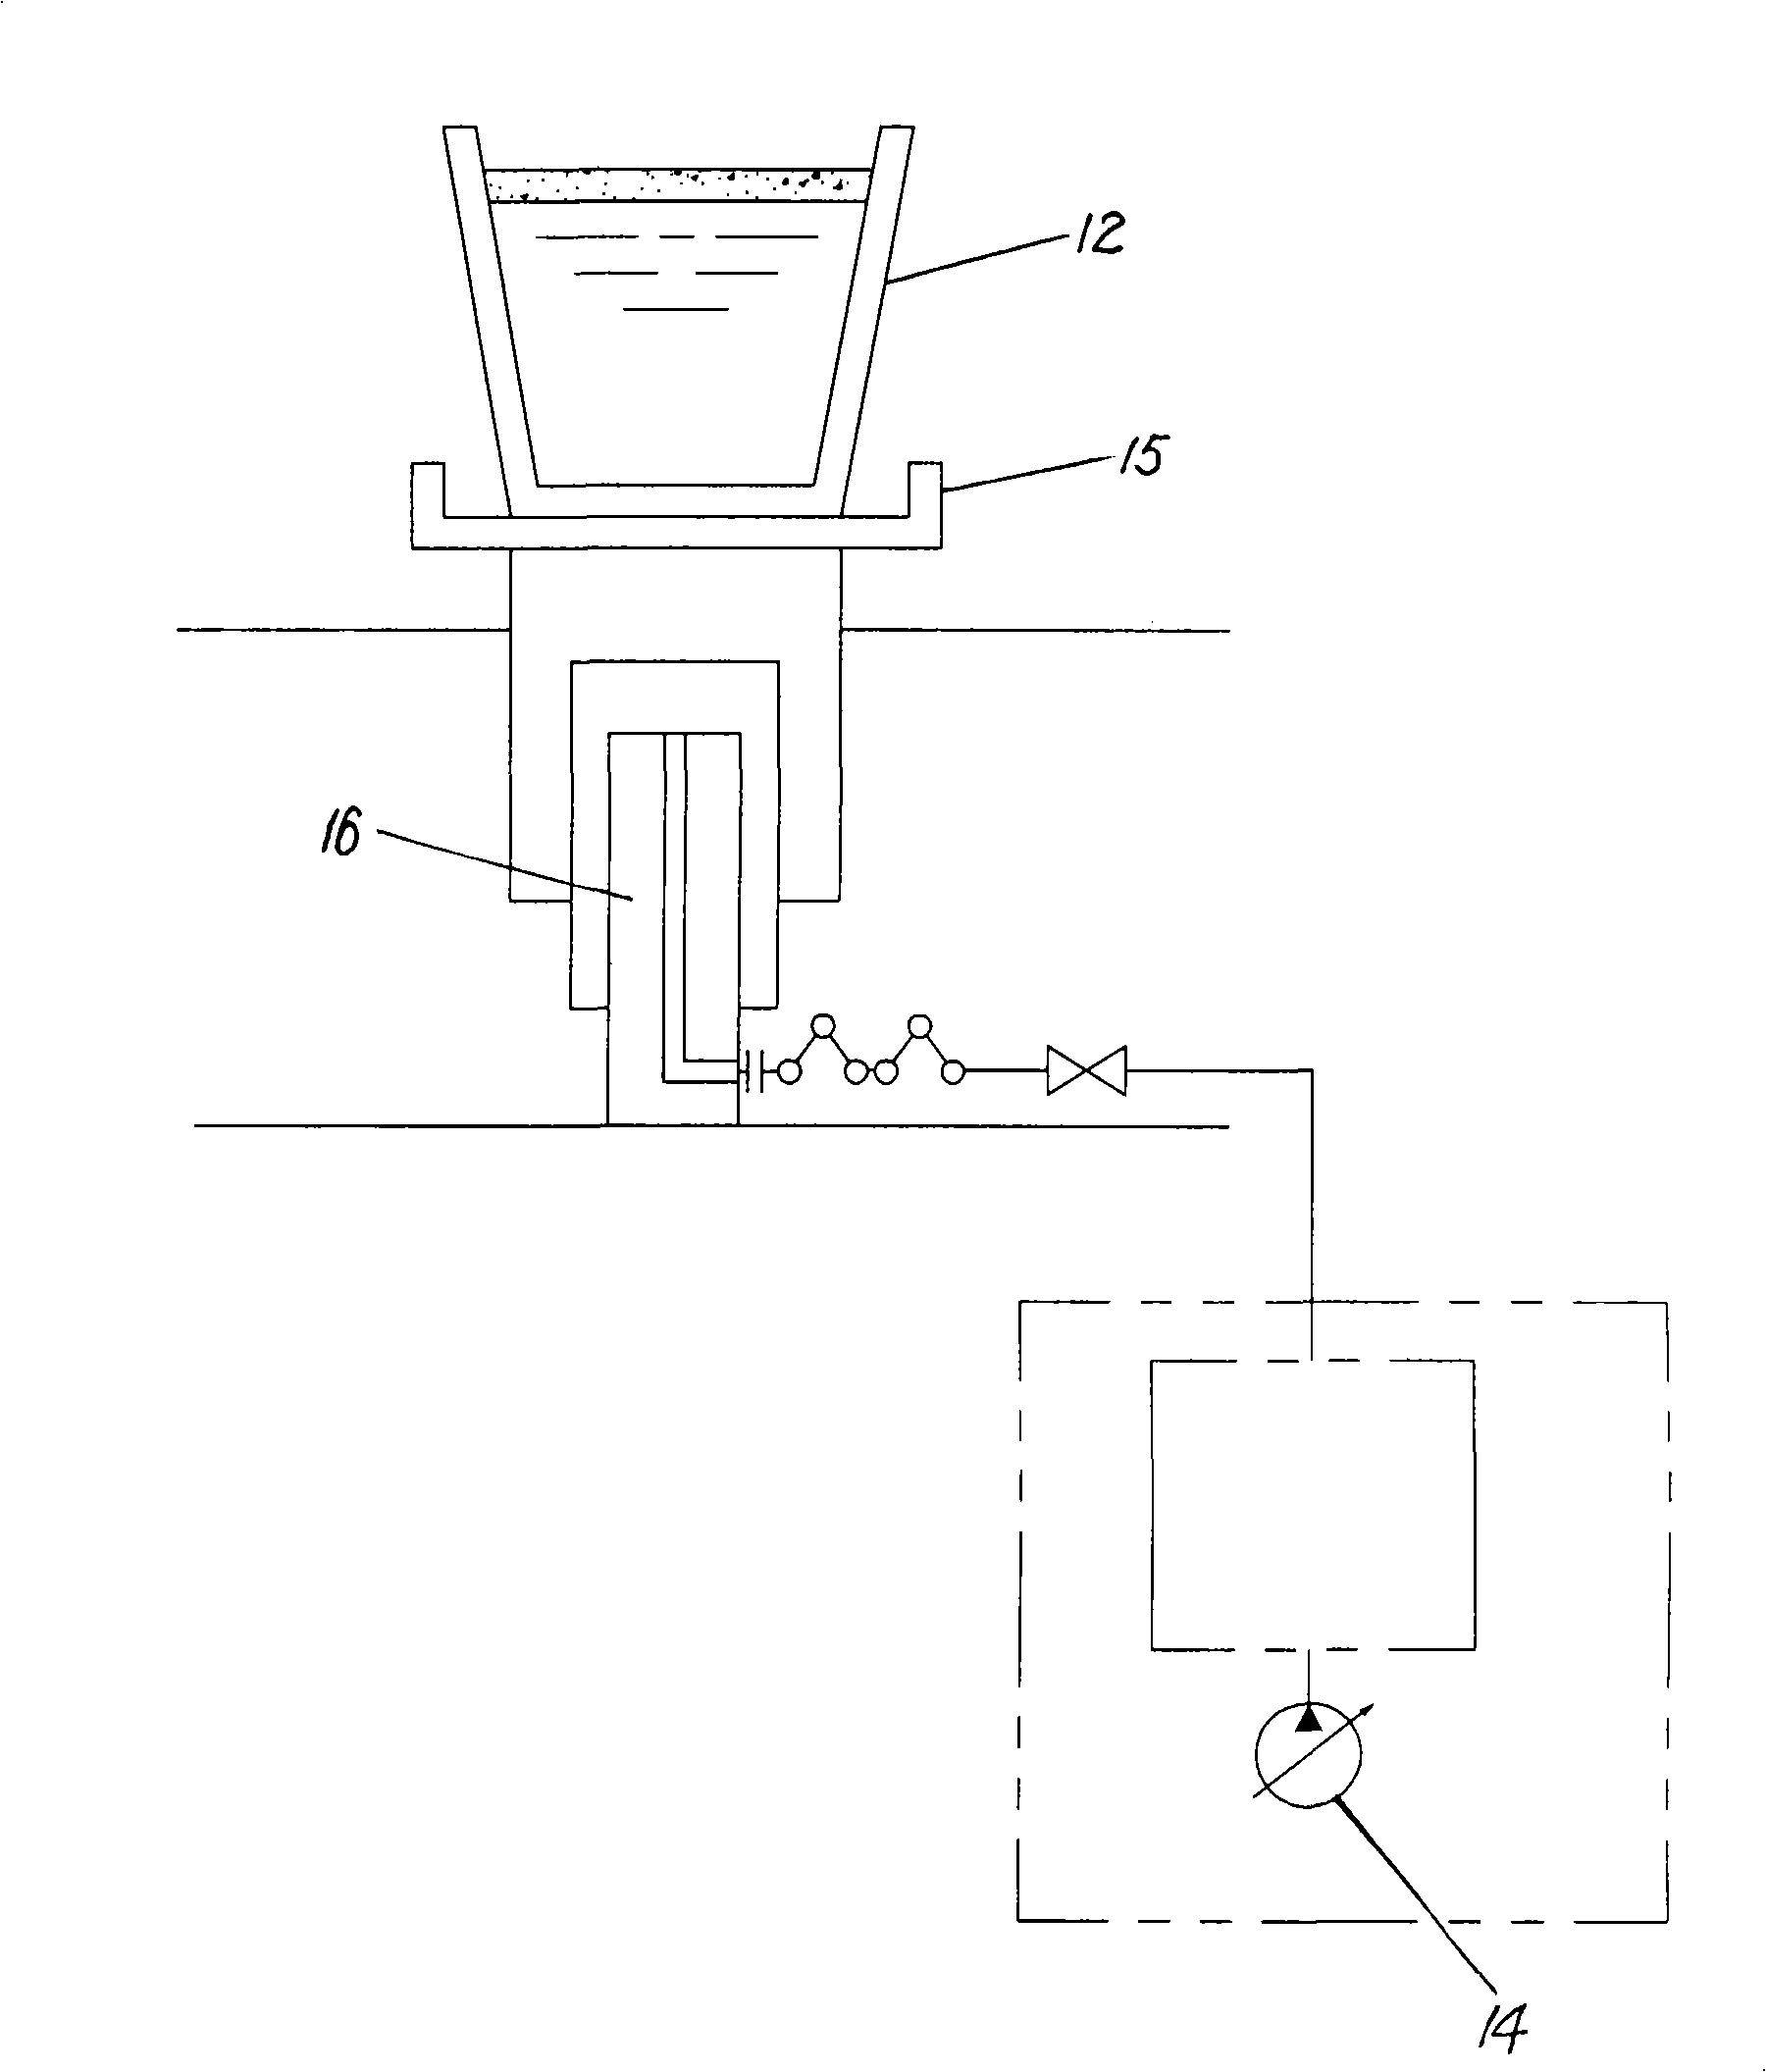 Ladle lifting hydraulic system using vacuum circulation degassing method